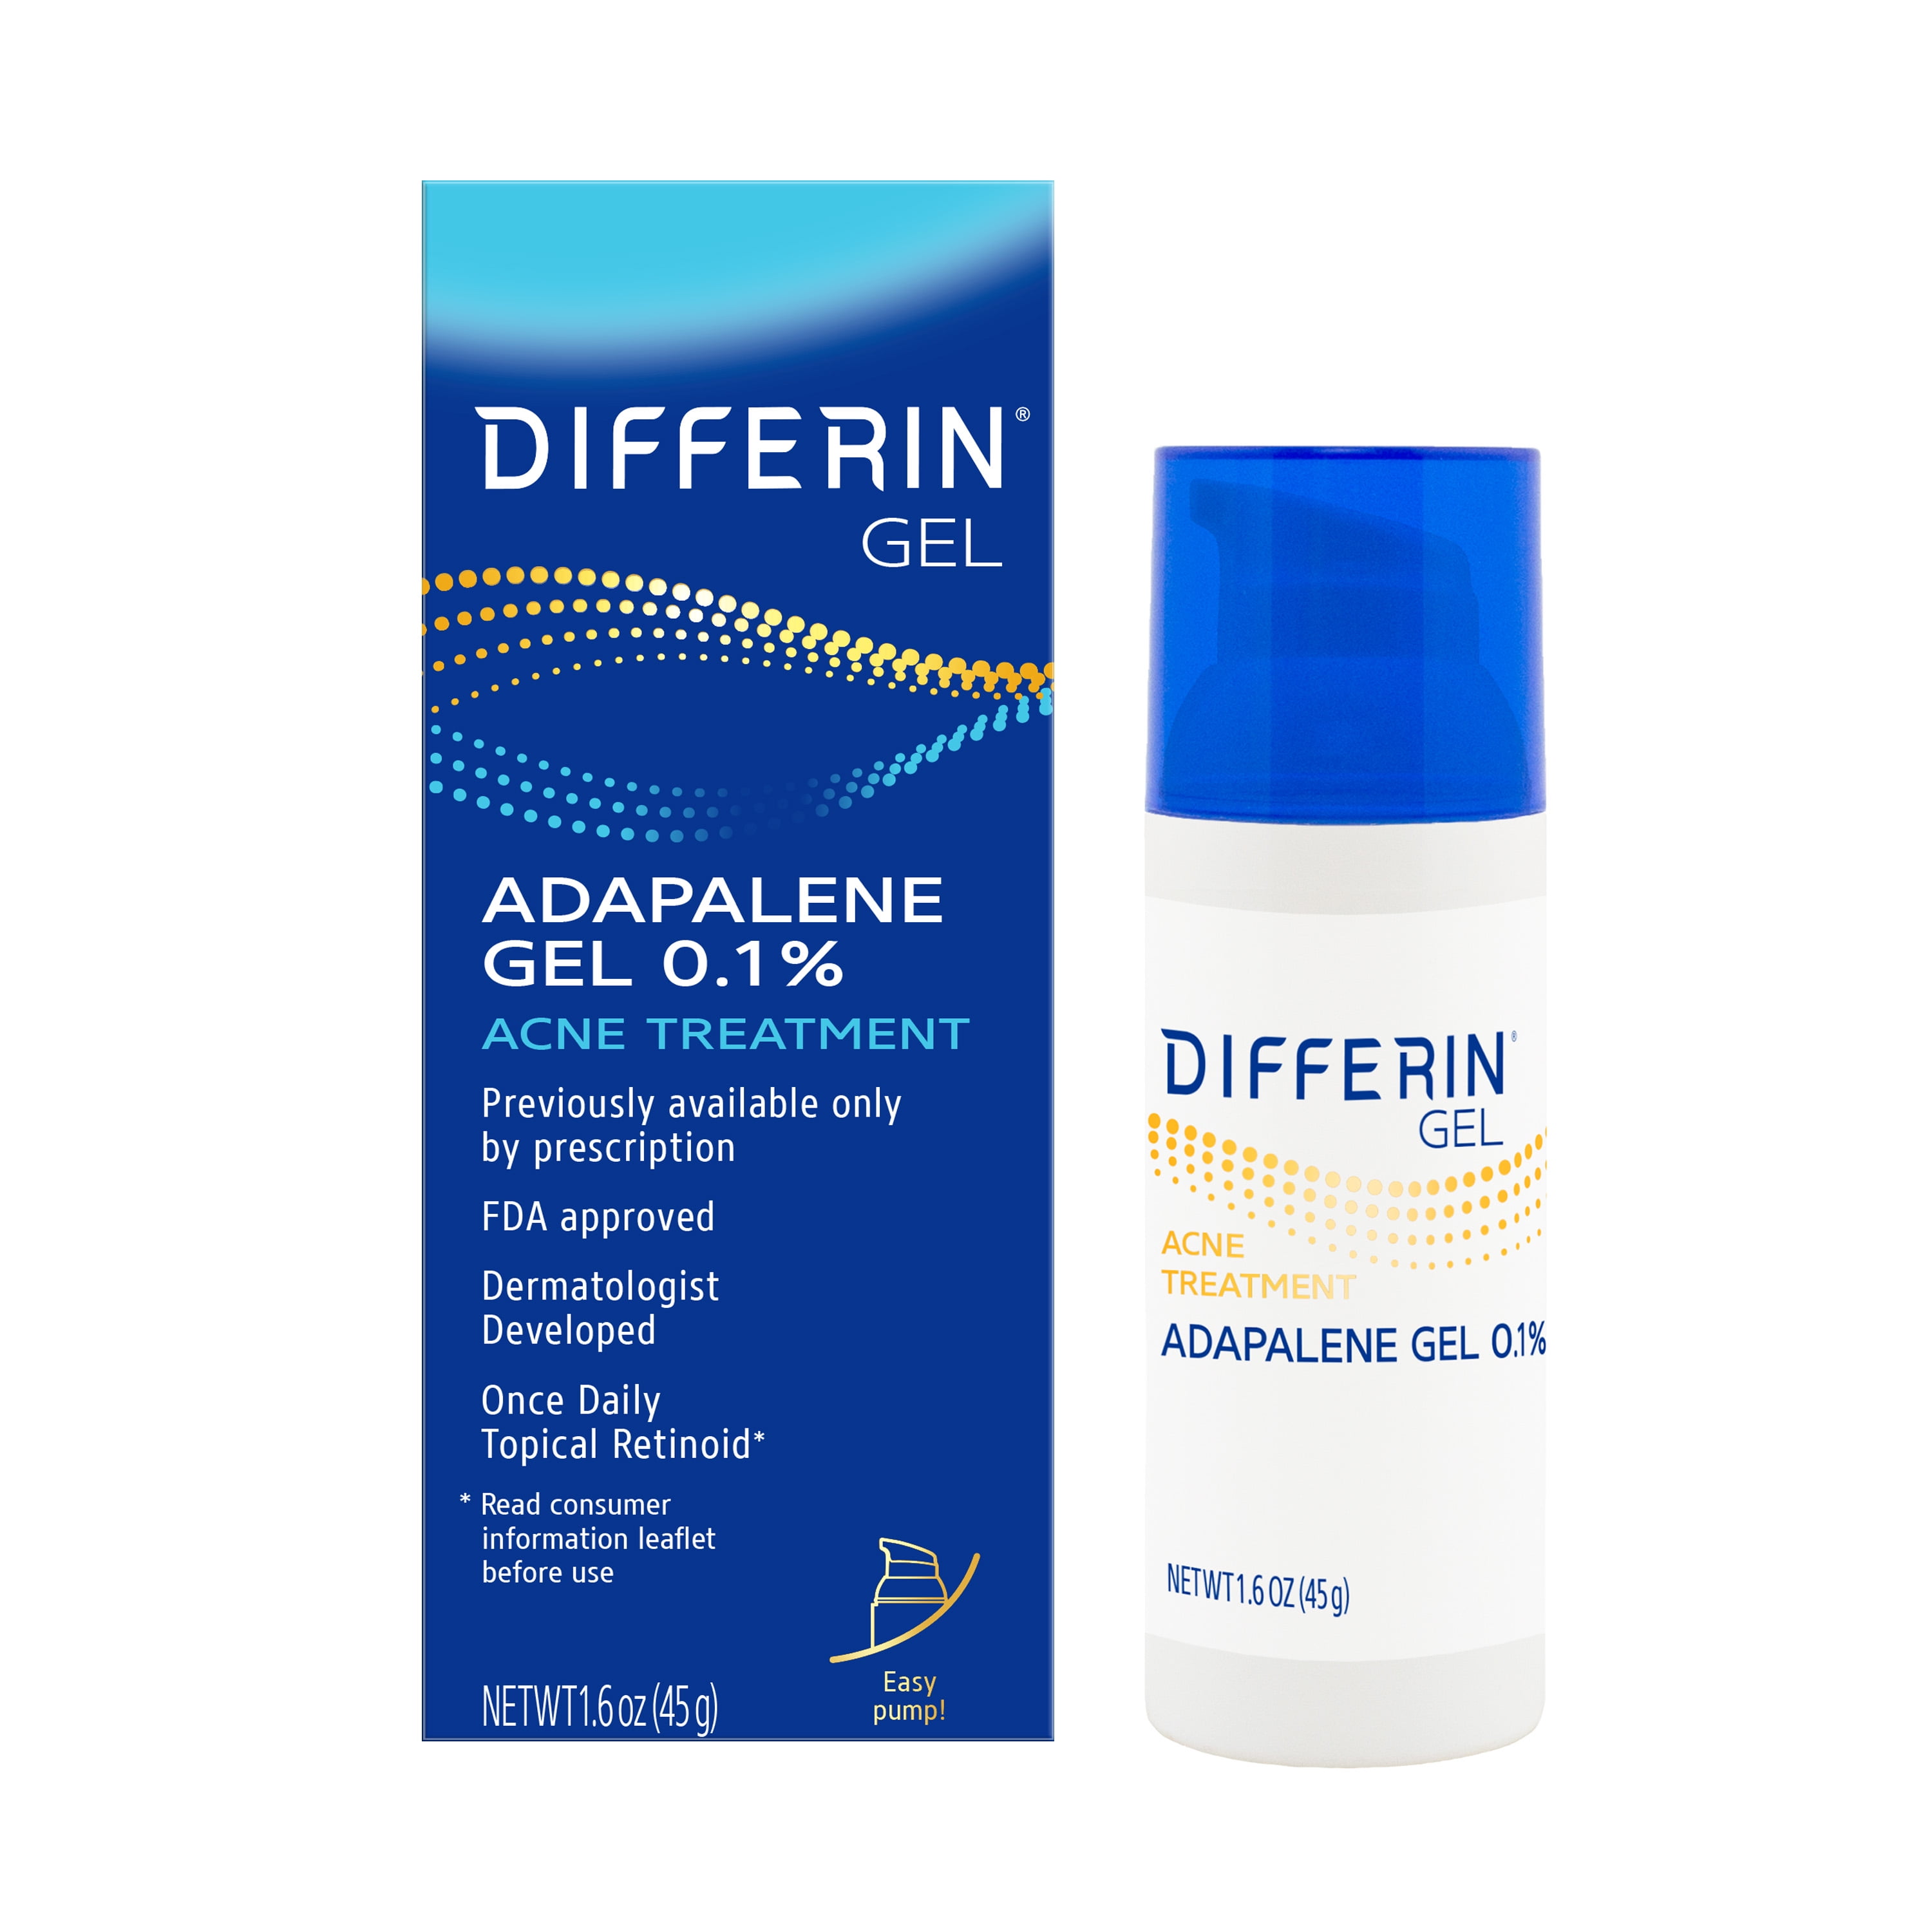 Differin Acne Treatment Treatment with 0.1% Adapalene, 1.6oz (45g) Pump - Walmart.com